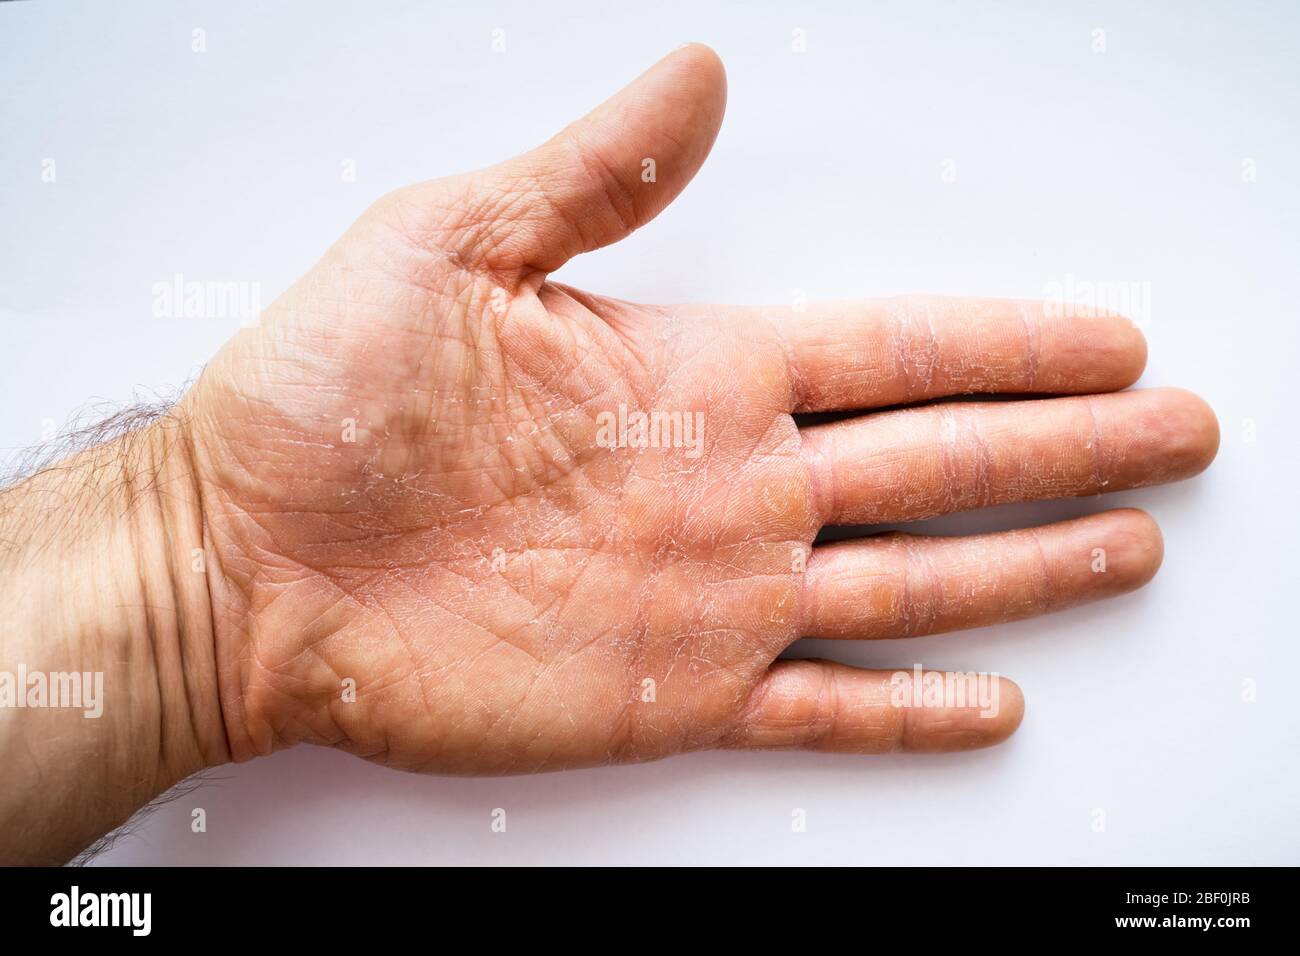 Dry Man Hand With Skin Peeling Off Stock Photo - Alamy